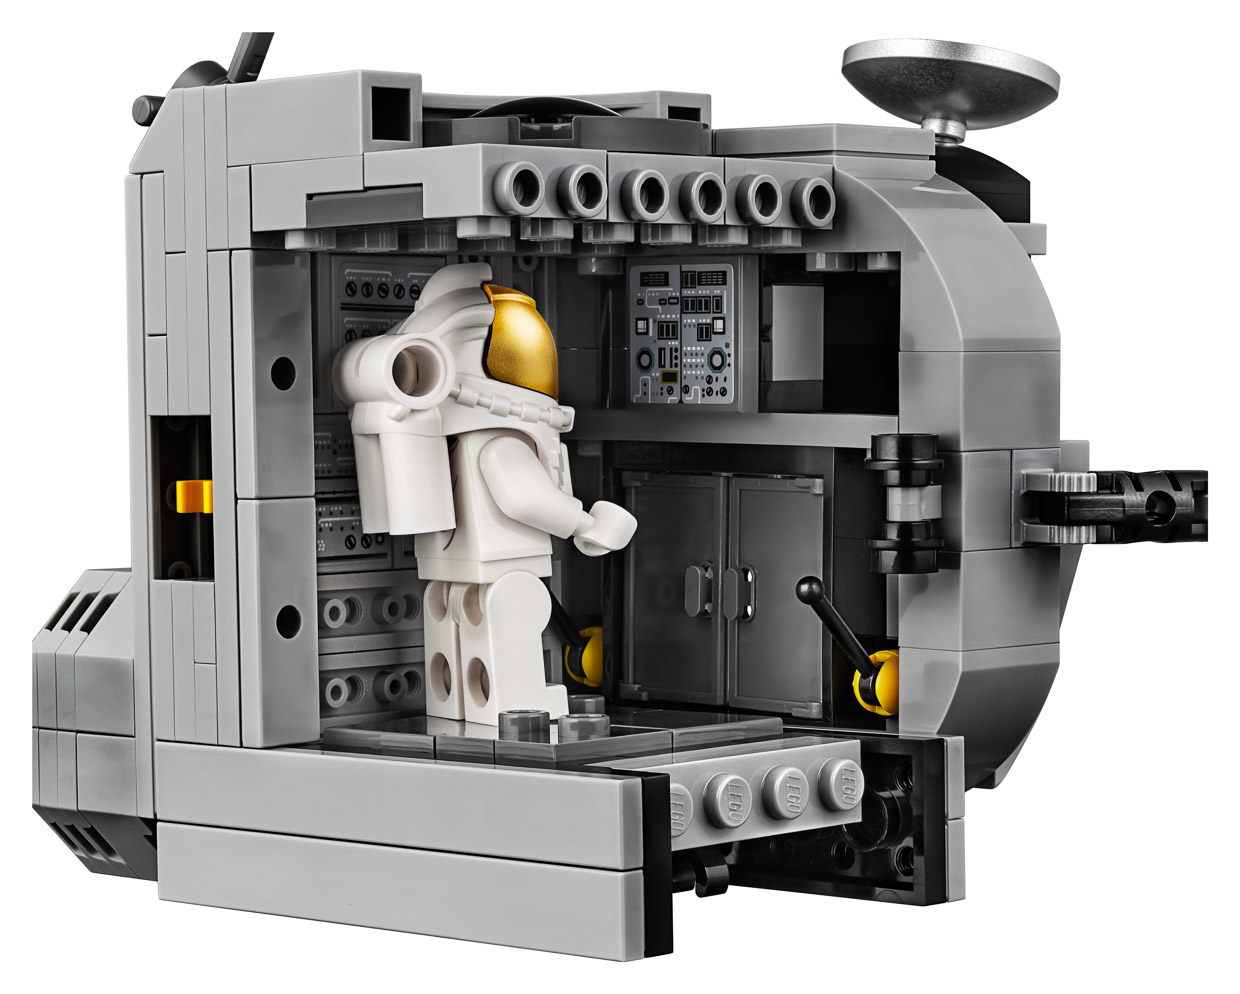 LEGO Apollo 11 Lunar Lander